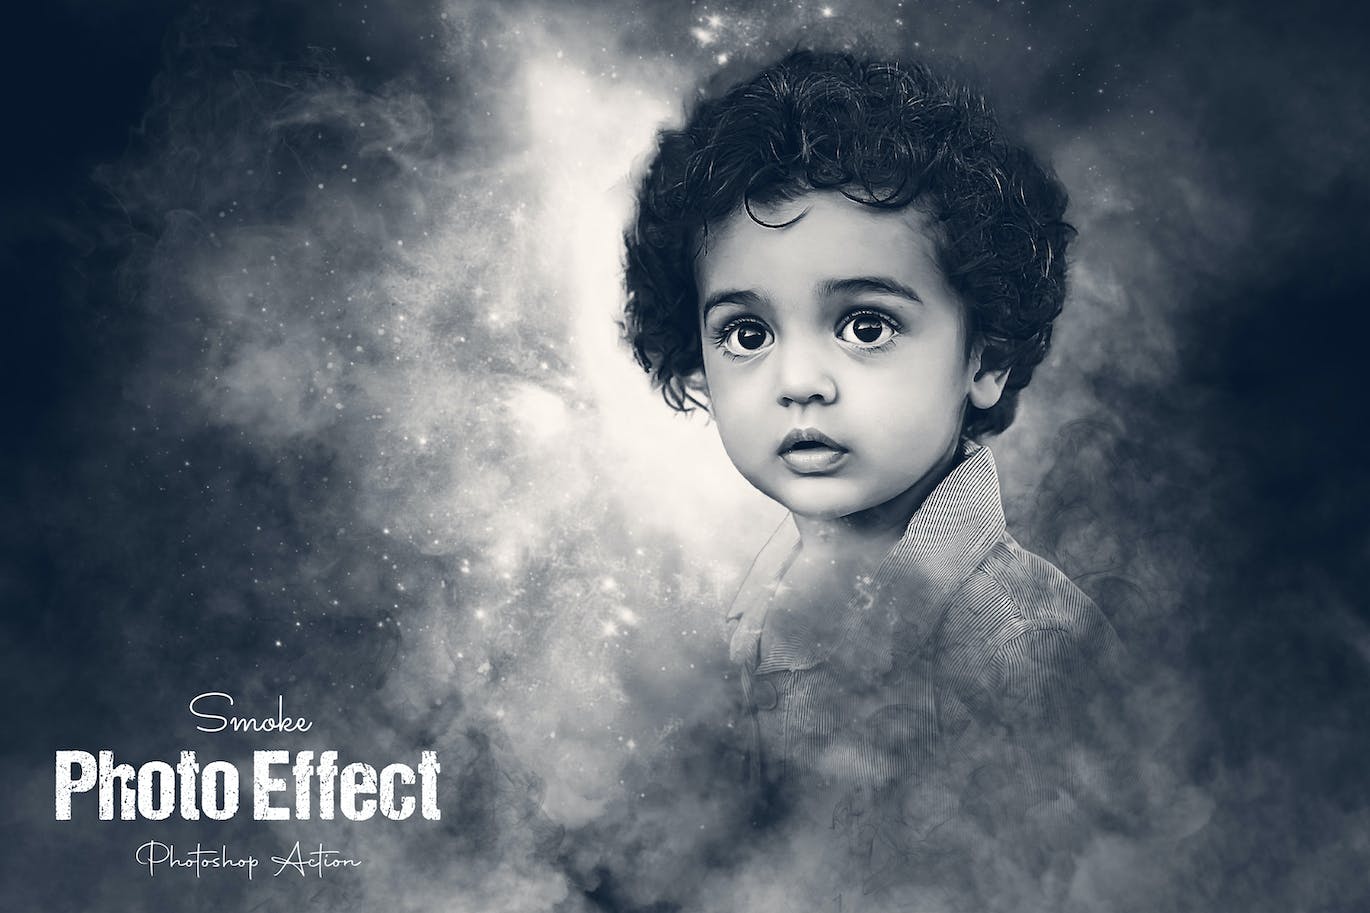 烟雾照片效果Photoshop动作 Smoke Photo Effect Photoshop Action 插件预设 第1张